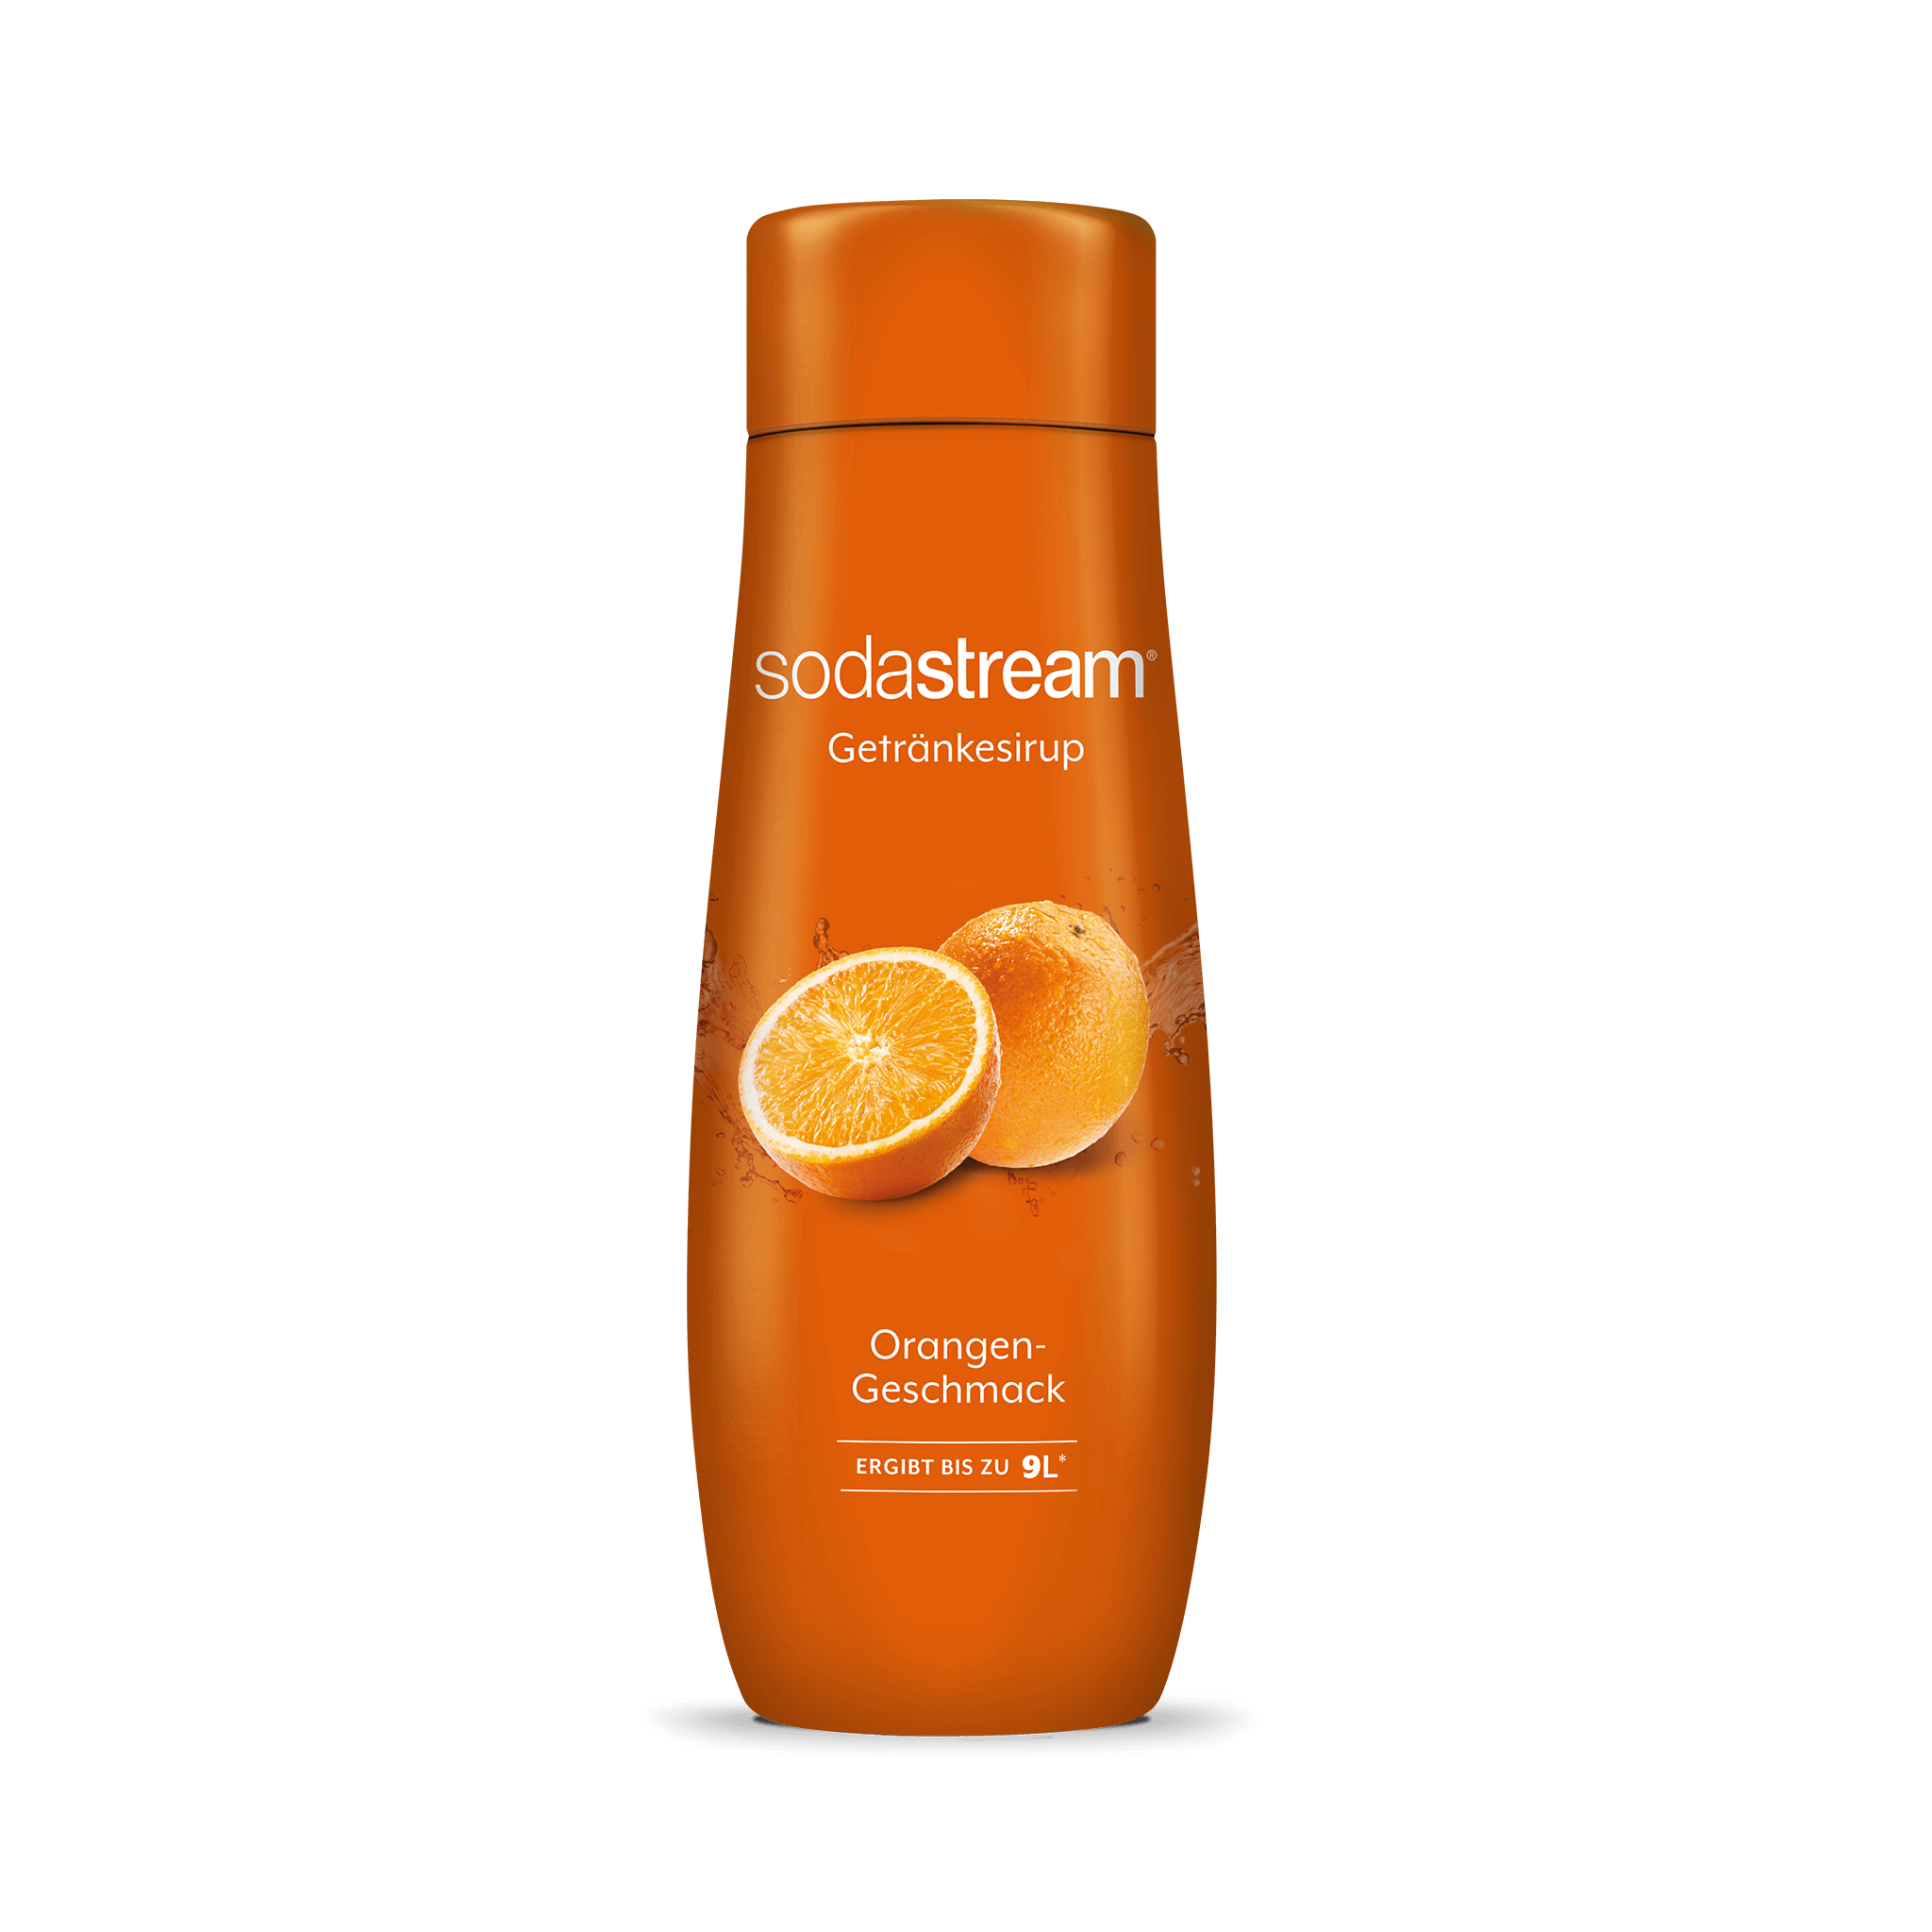 sodastream Orange Sirup Geschmack 440ml 